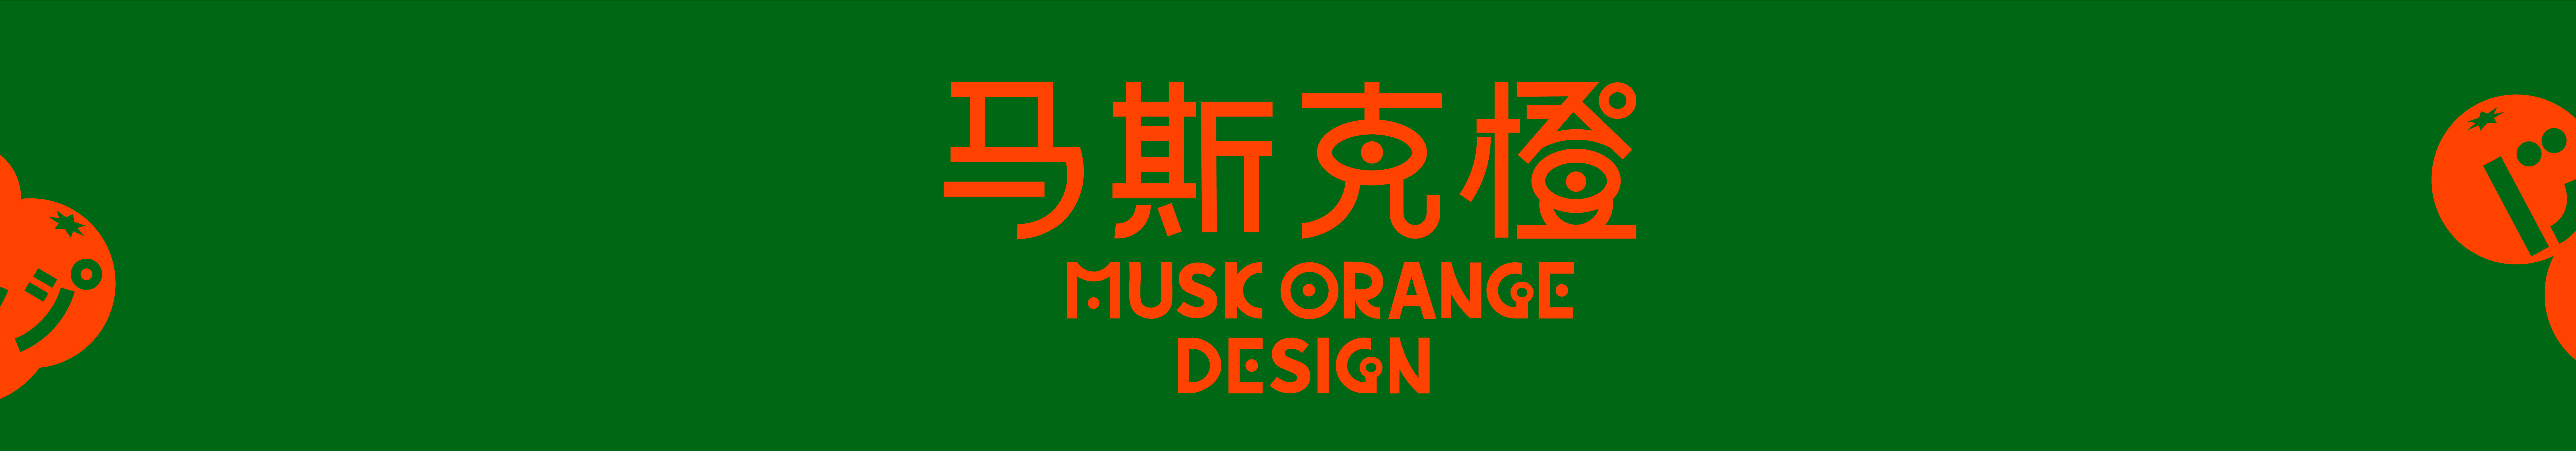 Musk Orange's profile banner